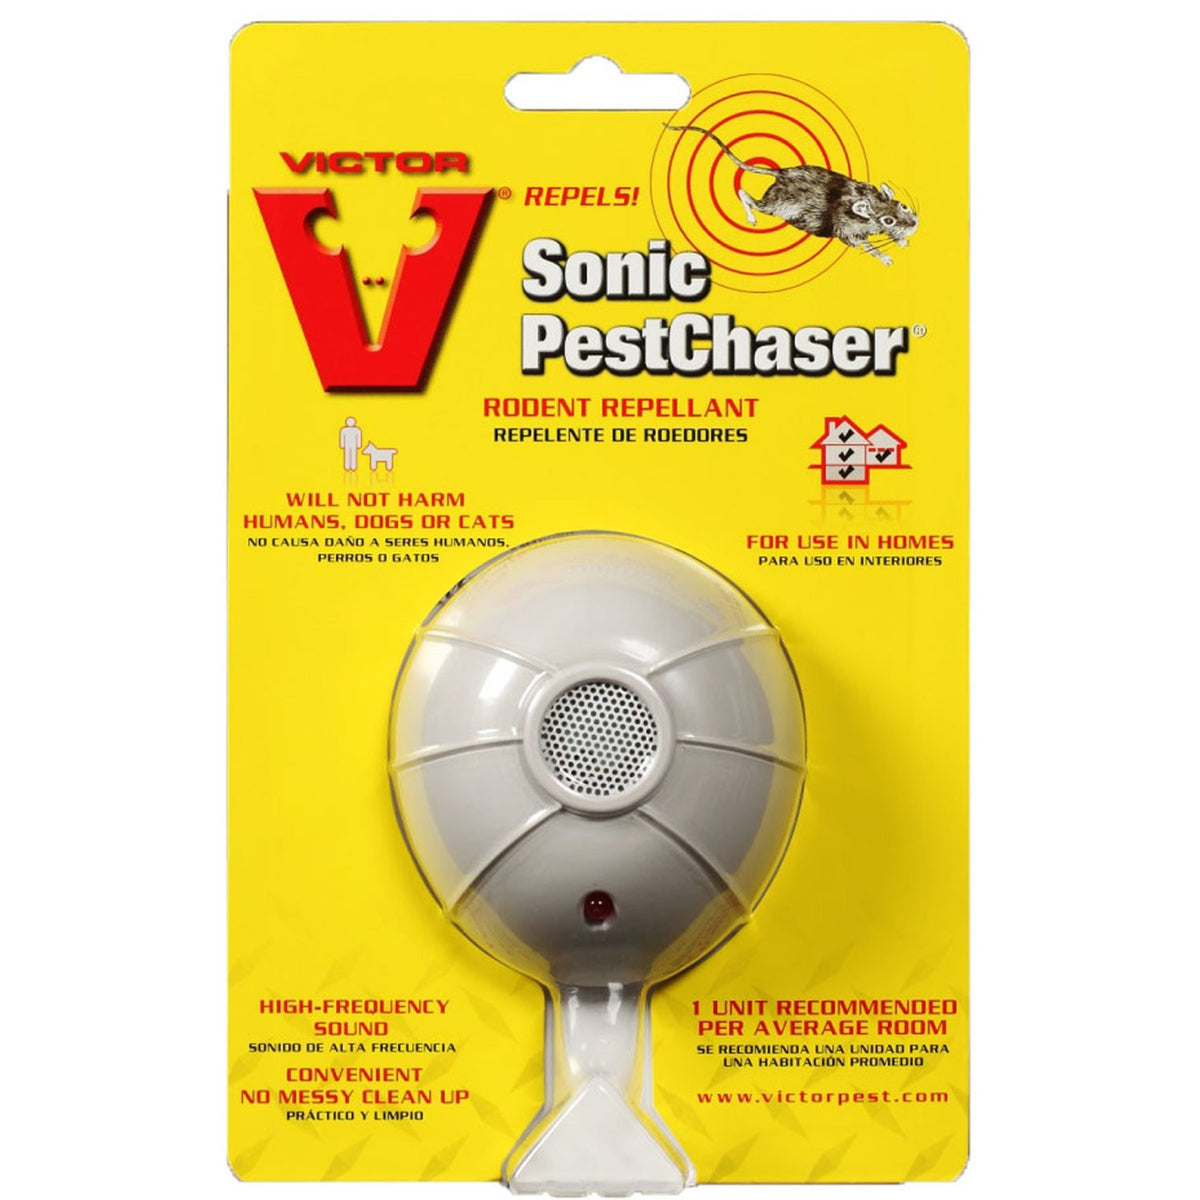 Victor M690S Sonic Pestchaser, 110V